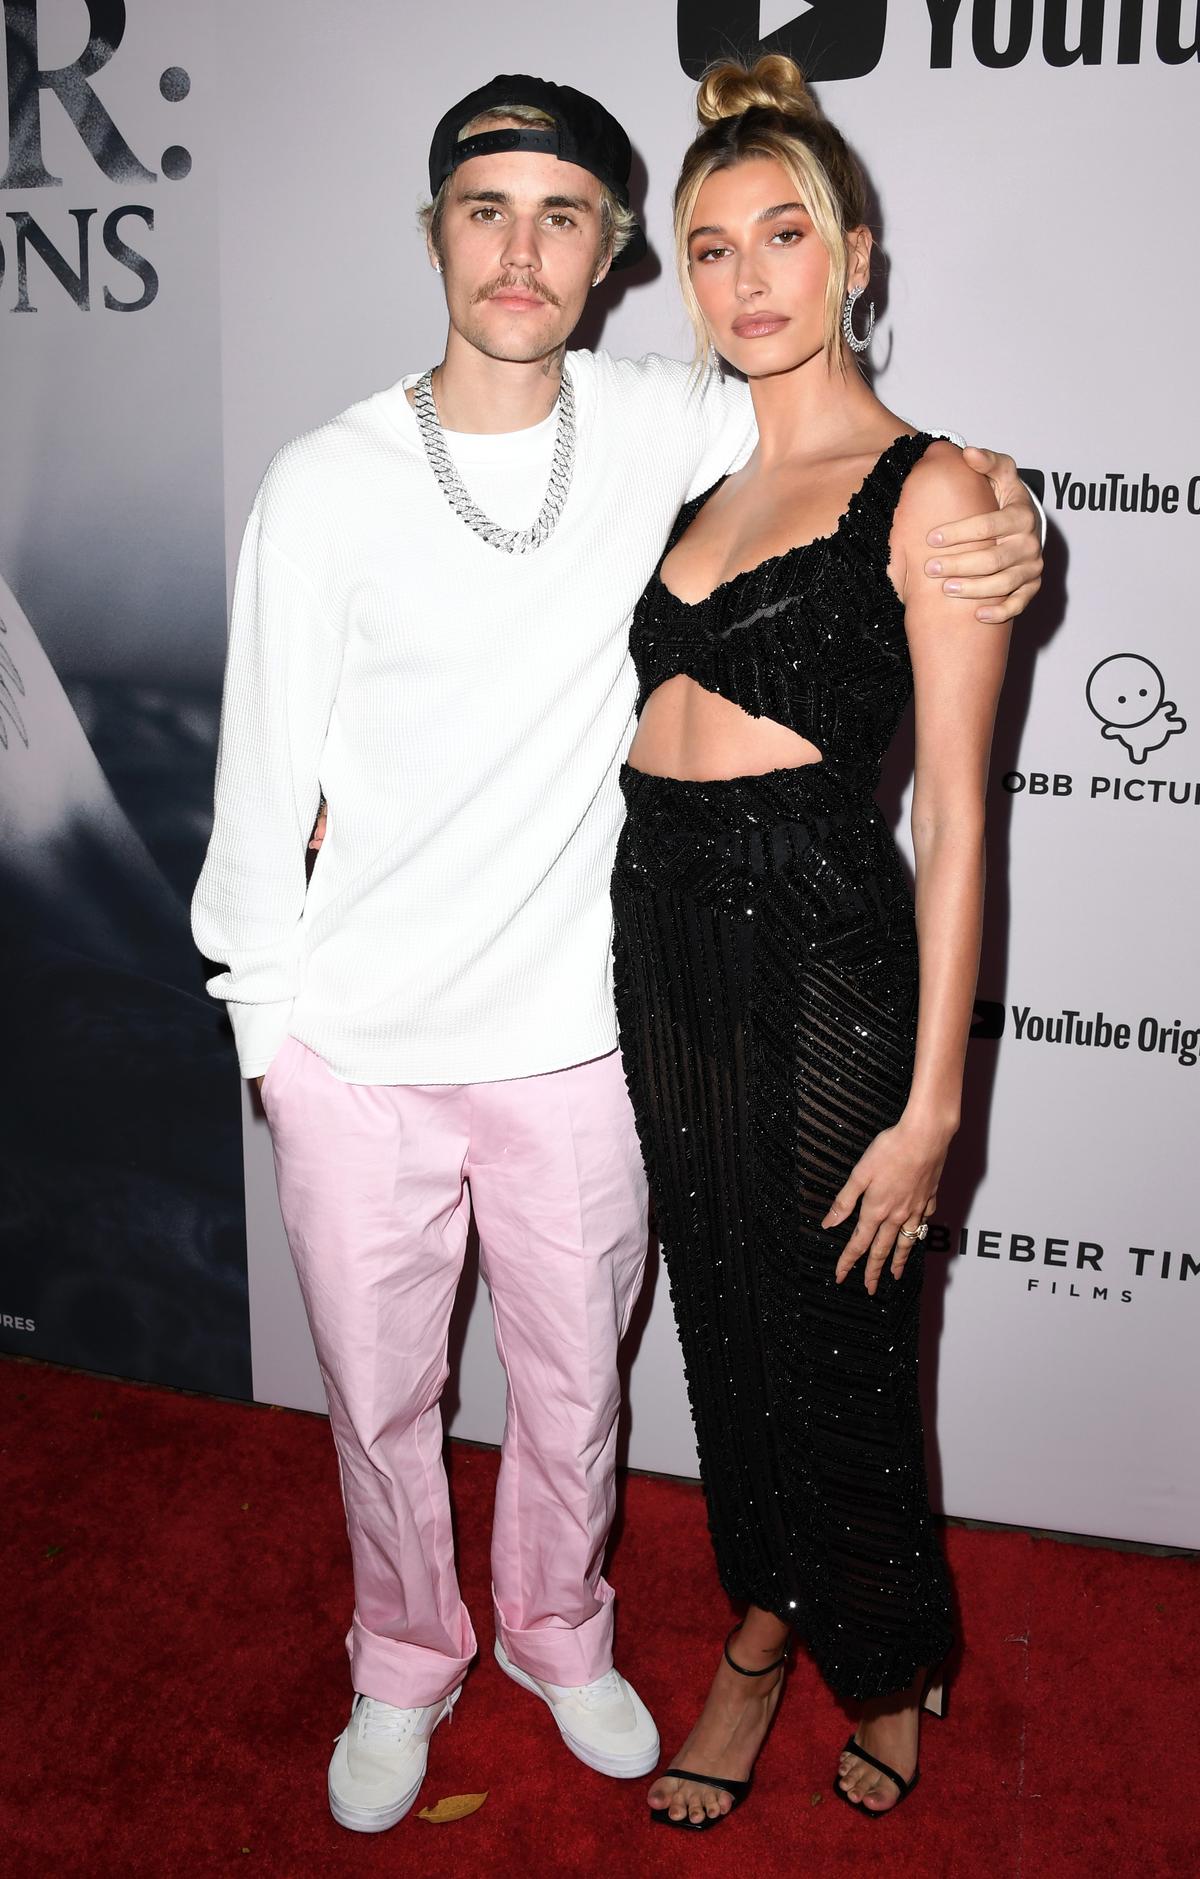 Justin Bieber and his wife, Hailey Baldwin, attend the premiere of YouTube Originals' "Justin Bieber: Seasons" at Regency Bruin Theatre in Los Angeles, California, on Jan. 27, 2020. (Jon Kopaloff/Getty Images)